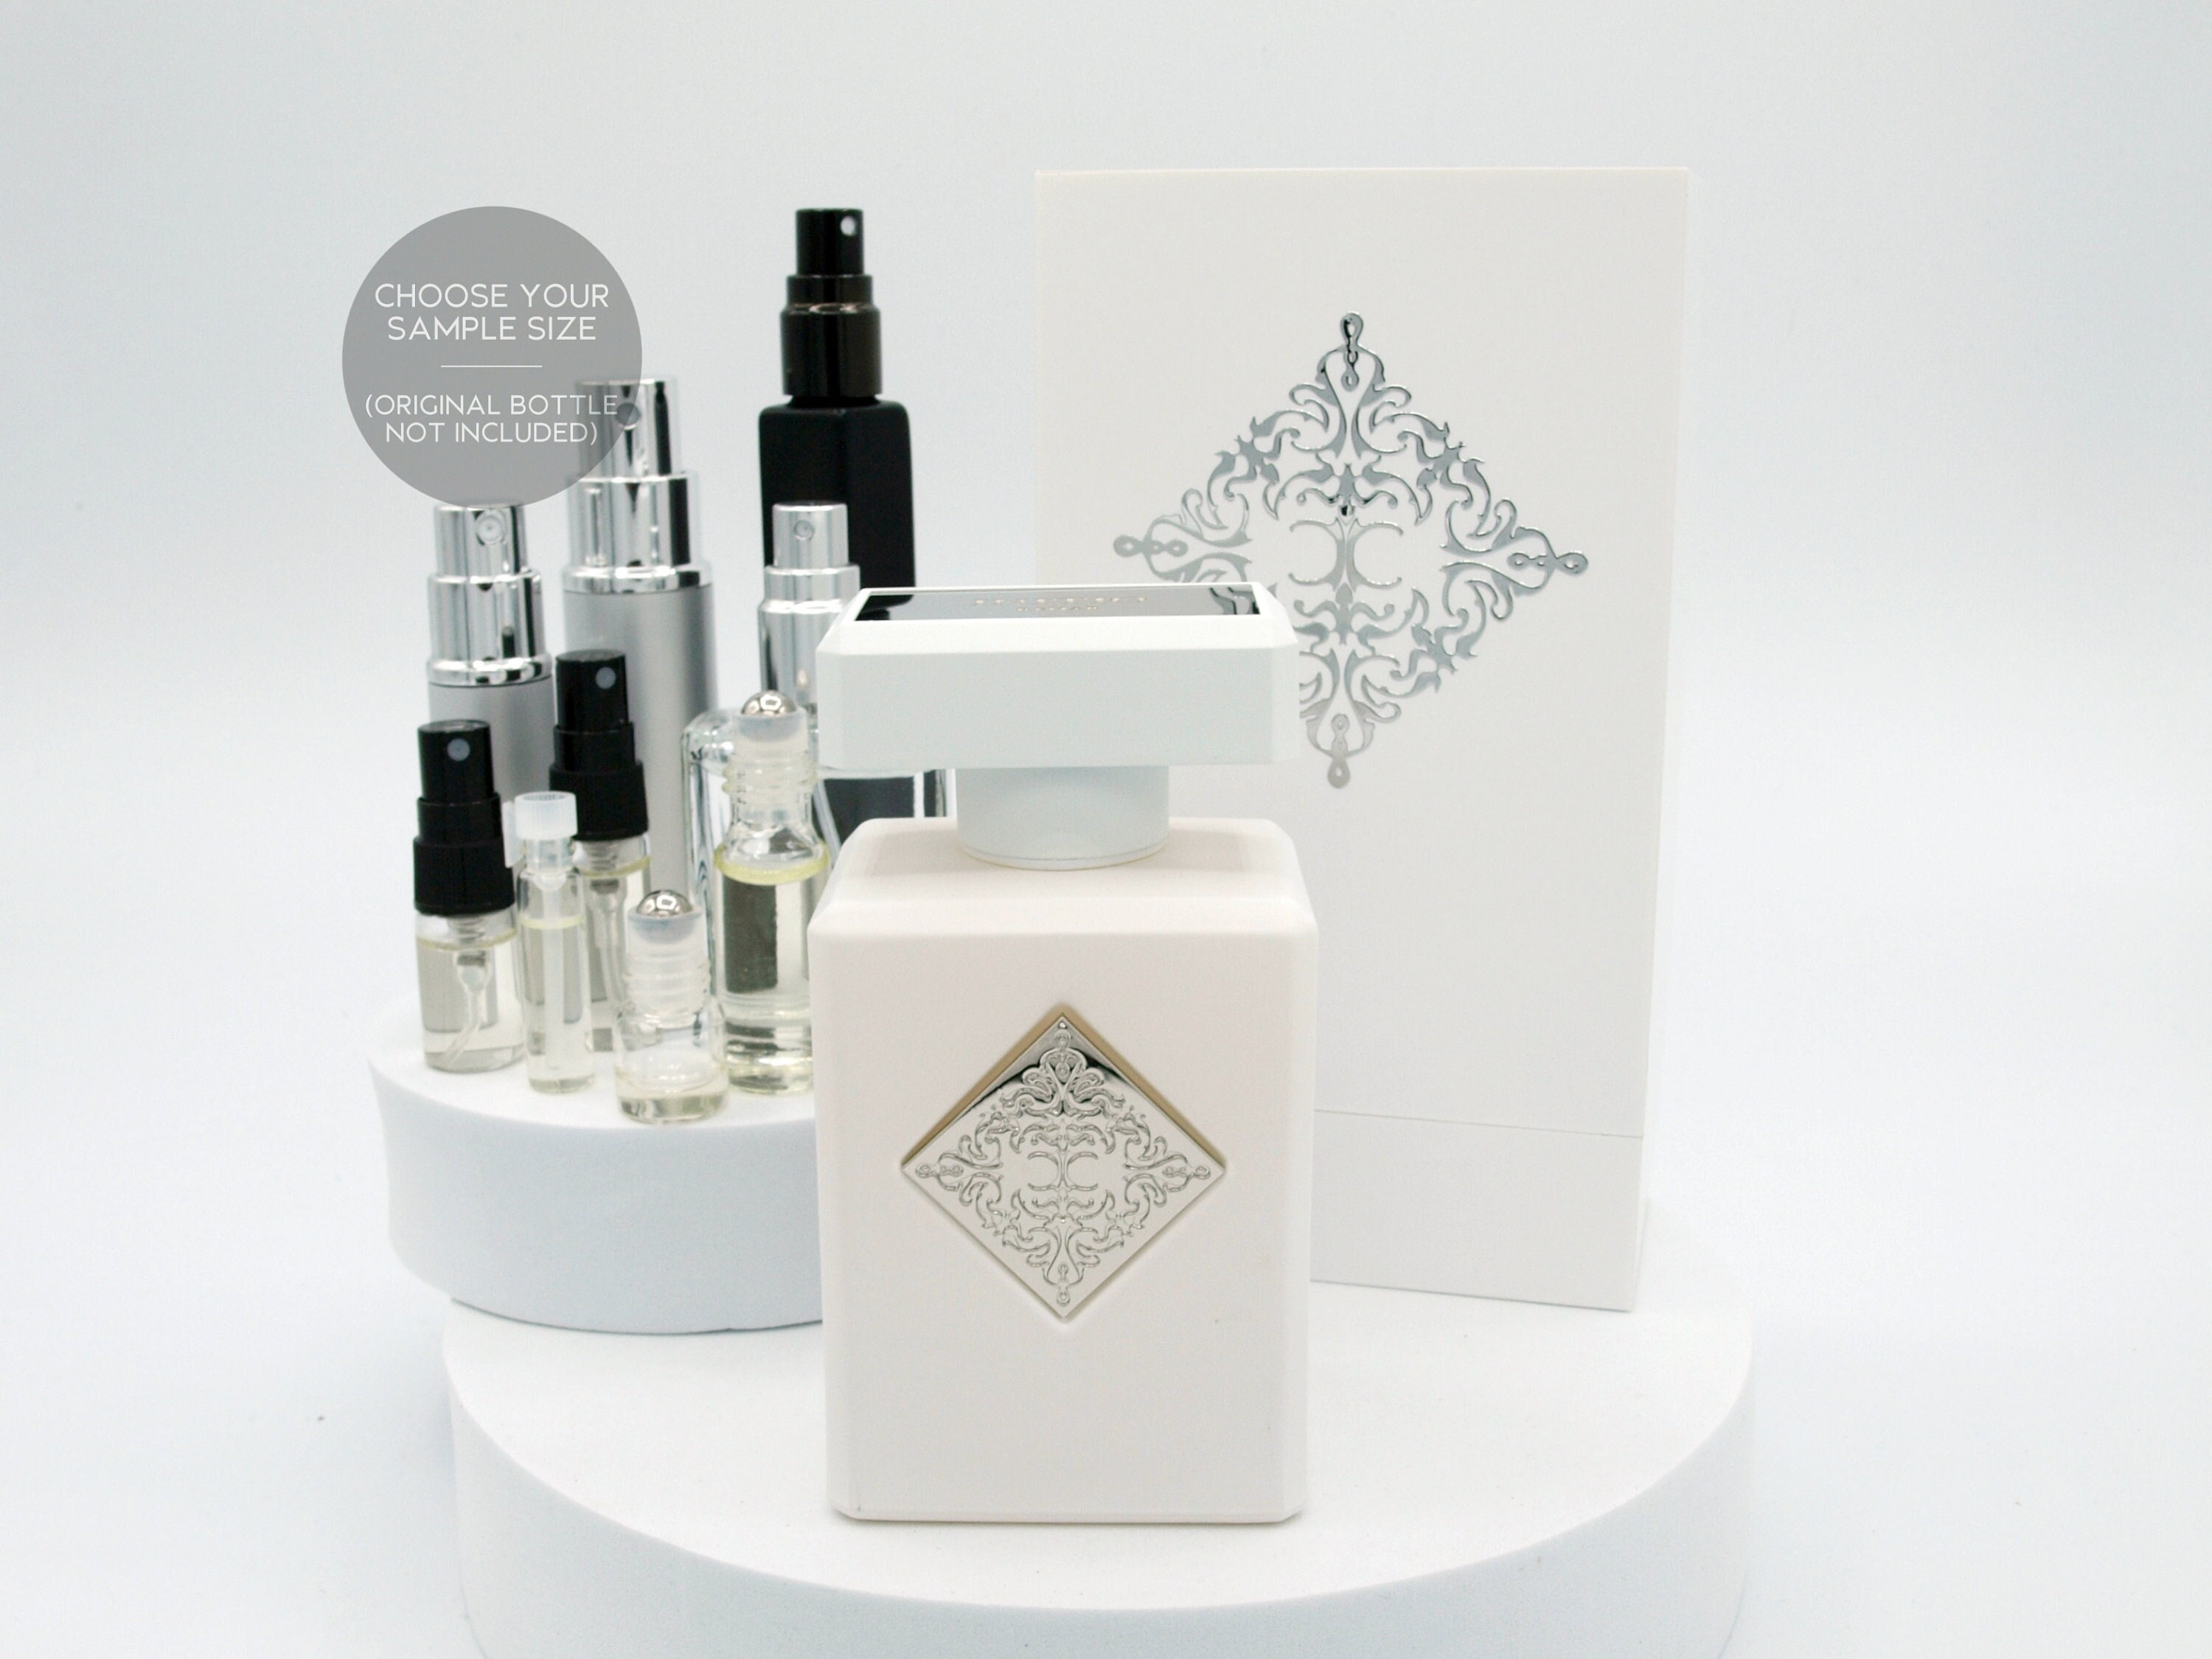 NEW Box Imagination Louis Vuitton Eau De Perfume 0.06oz 2ml Sample